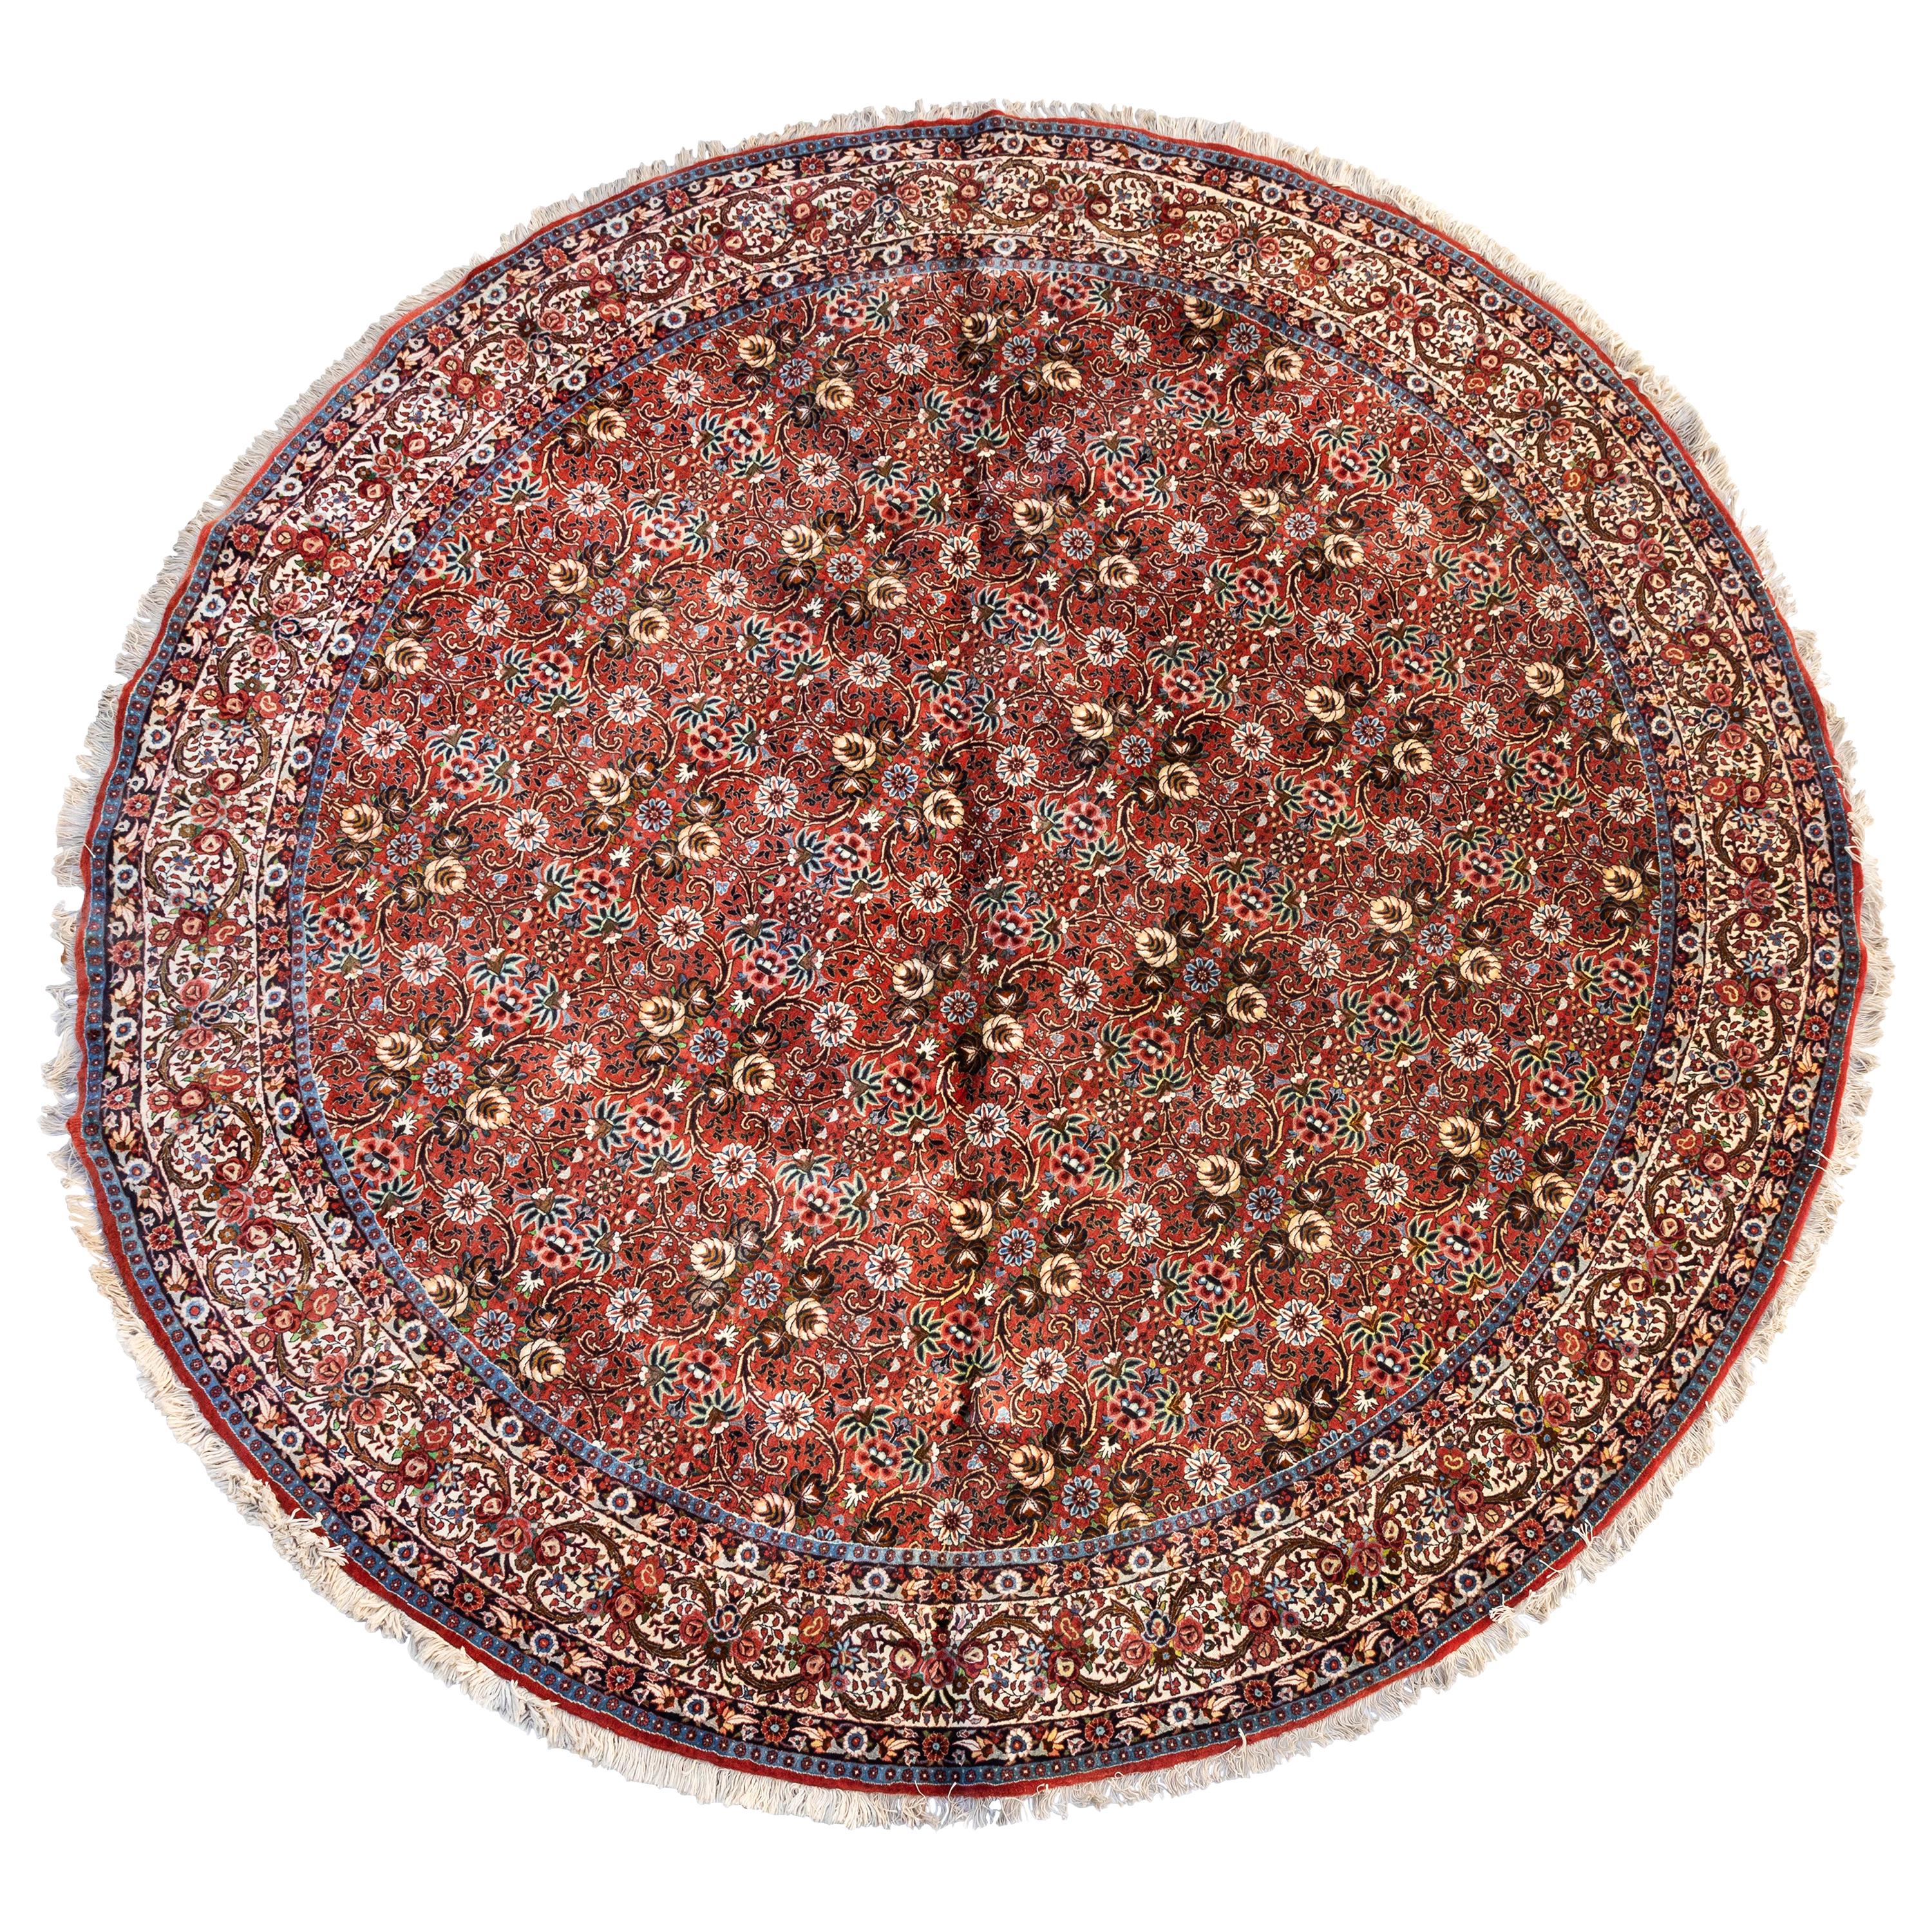 Semi Antique Round Circular Red Brown Navy Blue Ivory Floral Persian Bidjar Rug For Sale